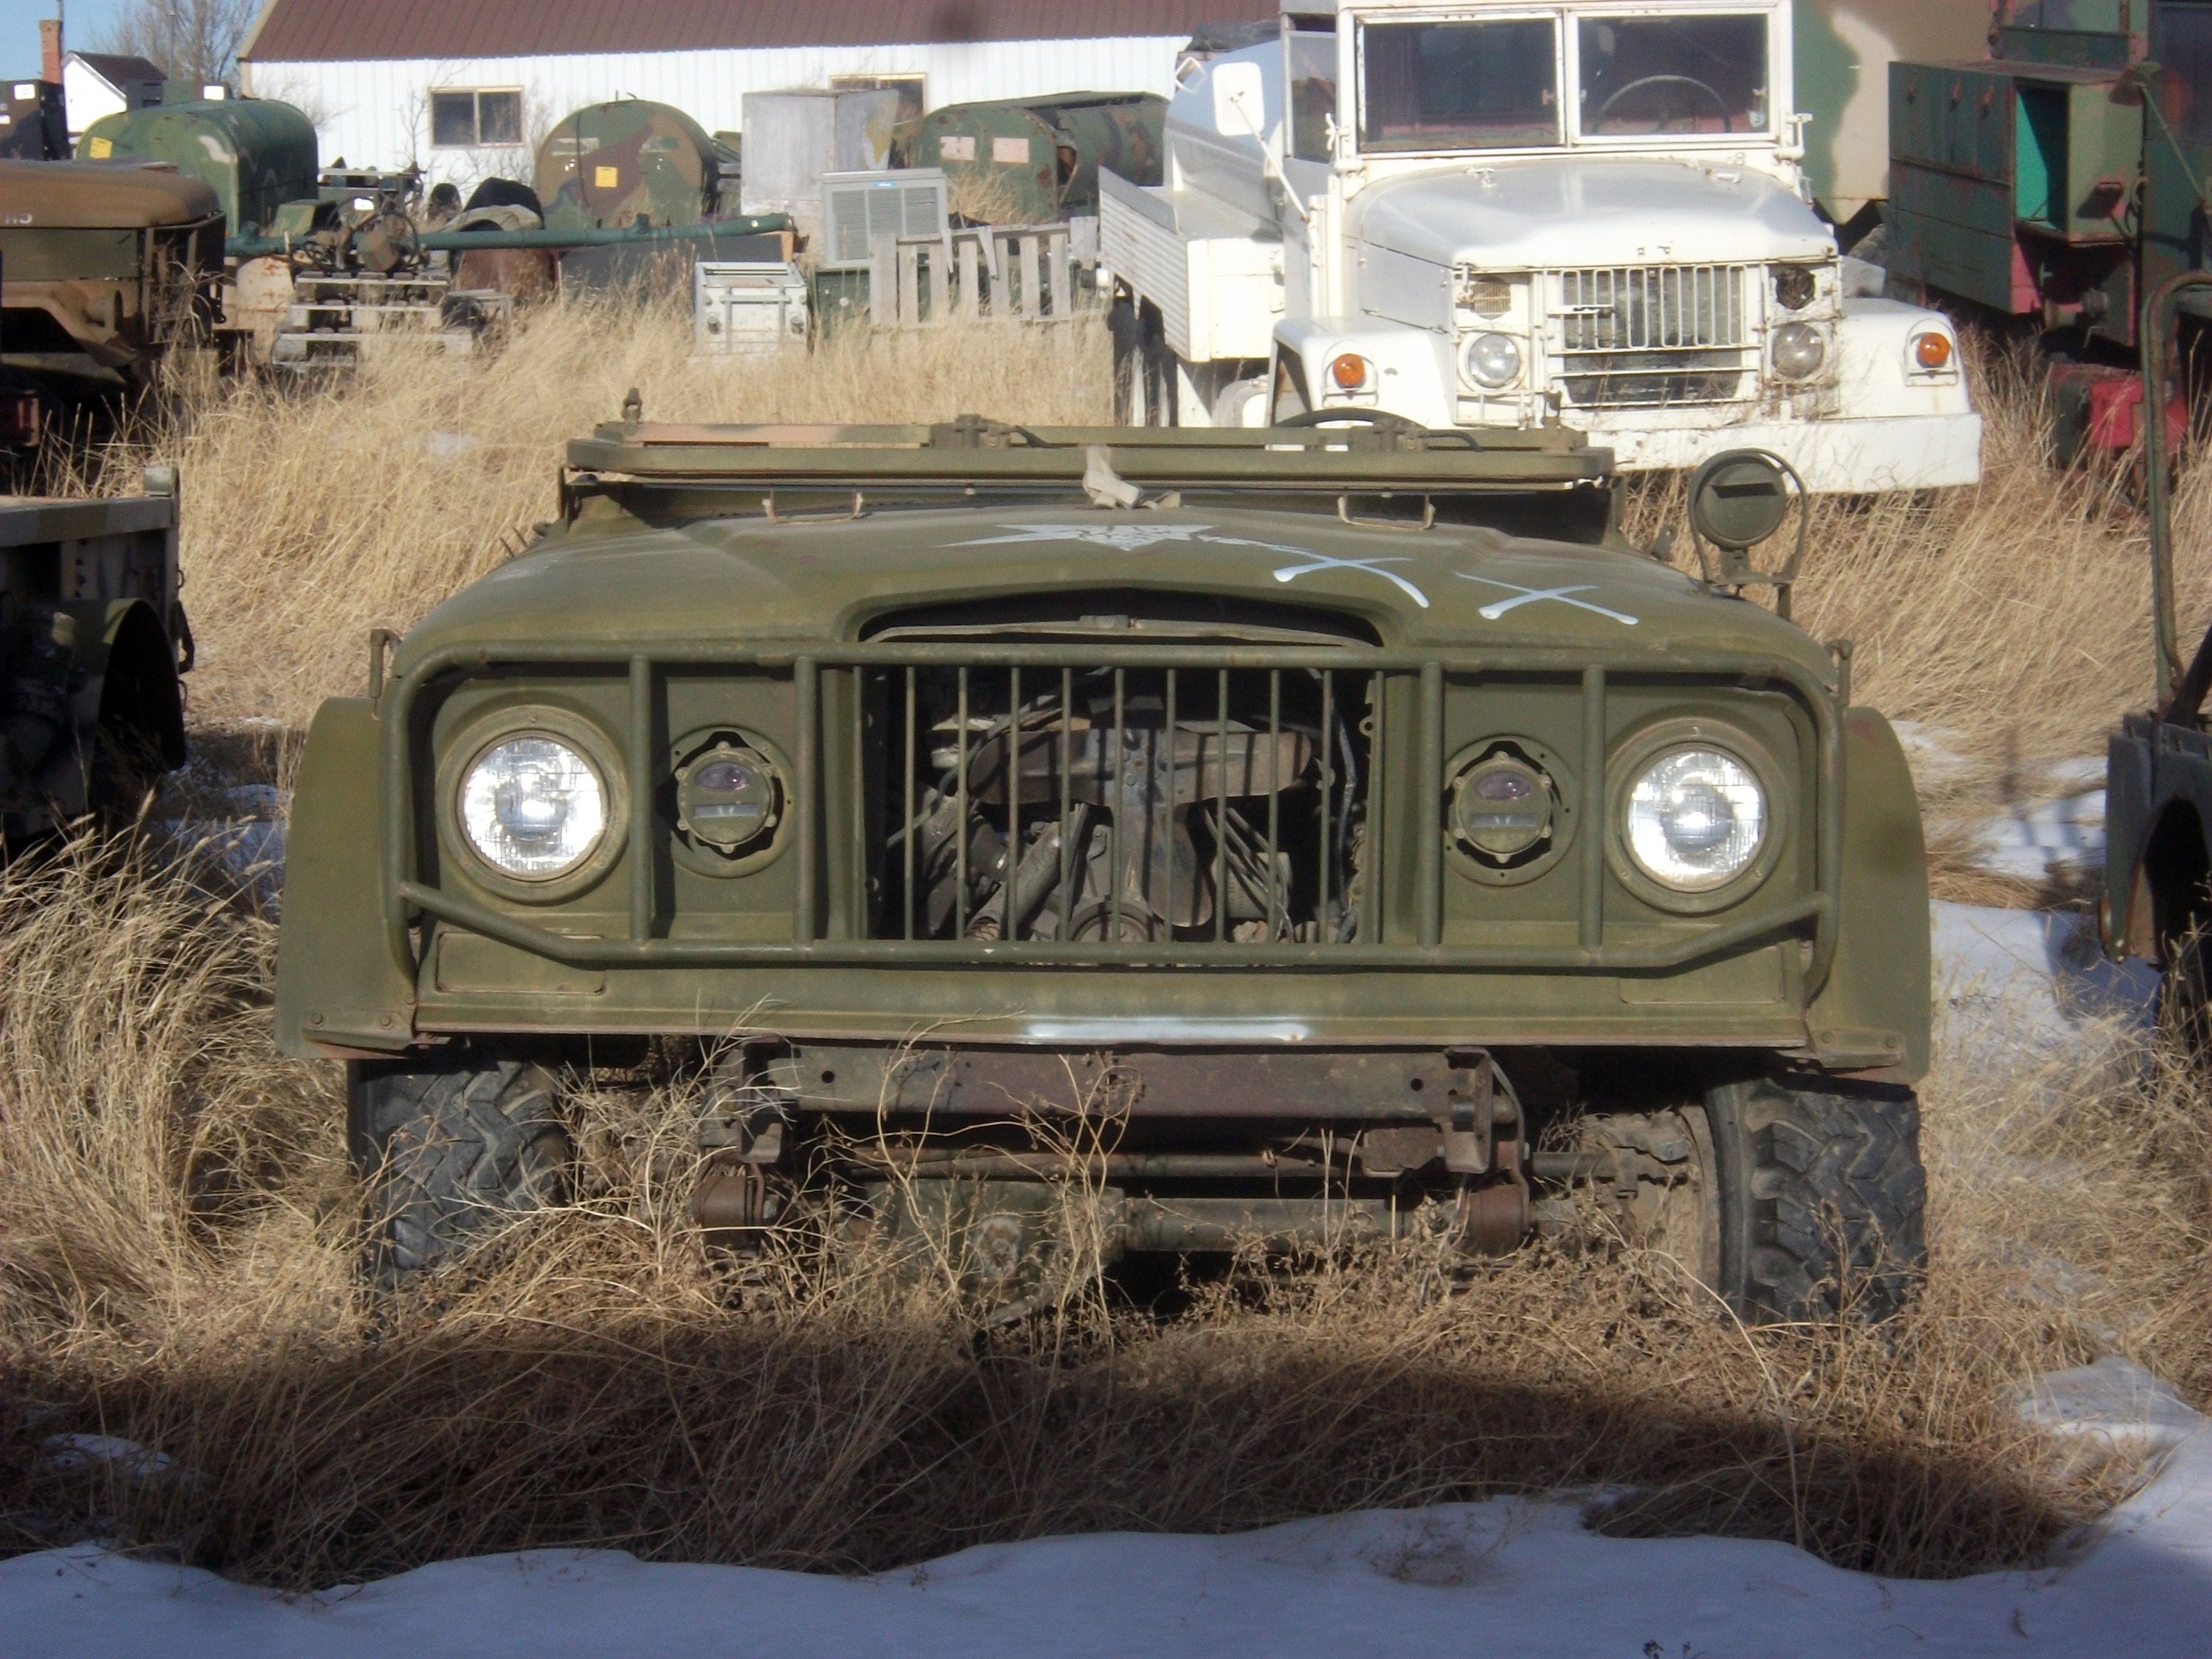 Military vehicle - Kaiser M715 | Flickr - Photo Sharing!